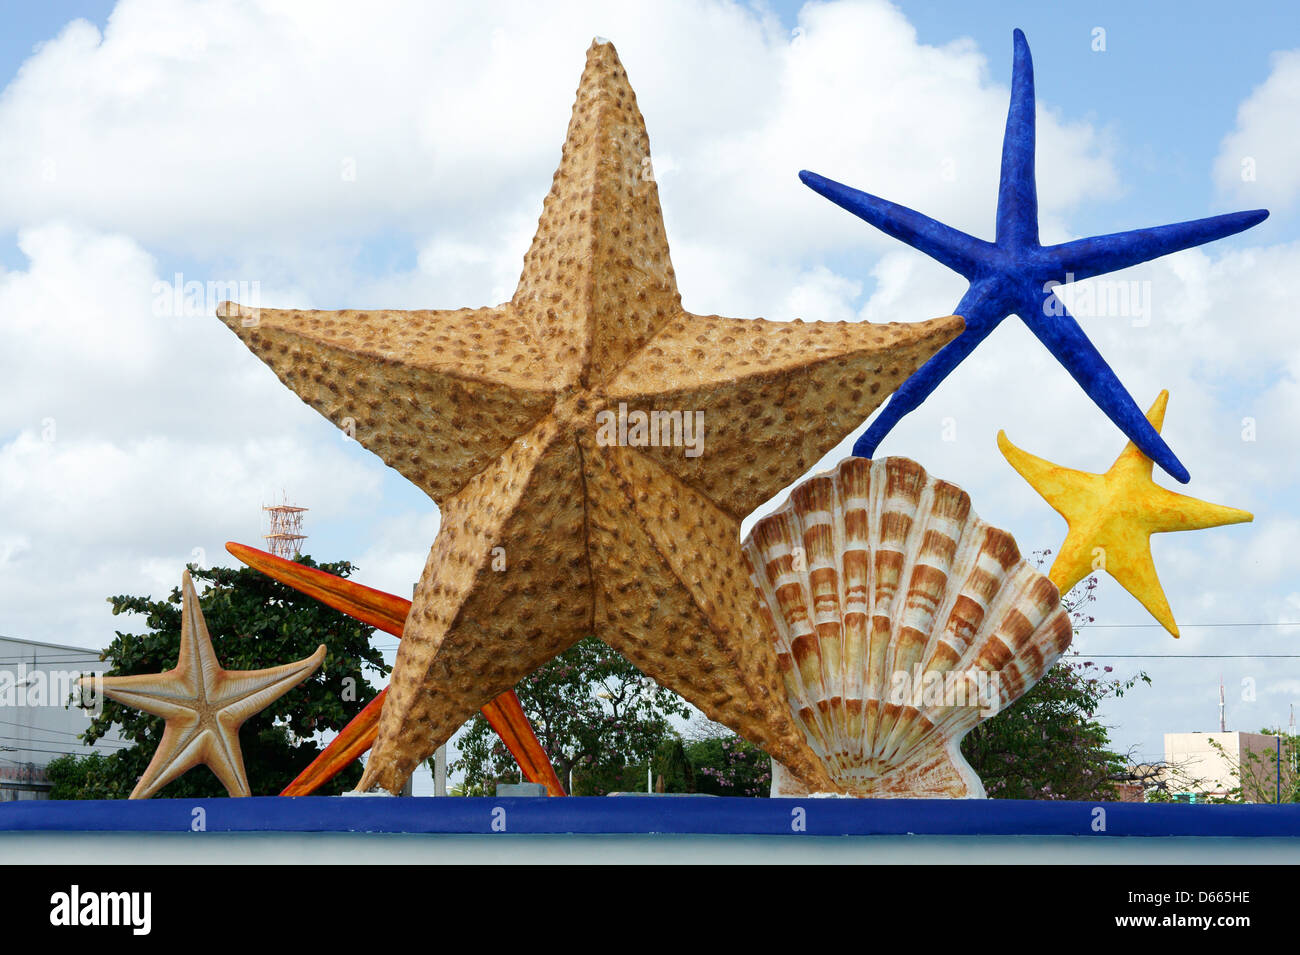 Plaza Caracoles o Ceviche fountain Square, estrellas de mar y conchas de mar en el centro de Cancún, Quintana Roo, México. Foto de stock